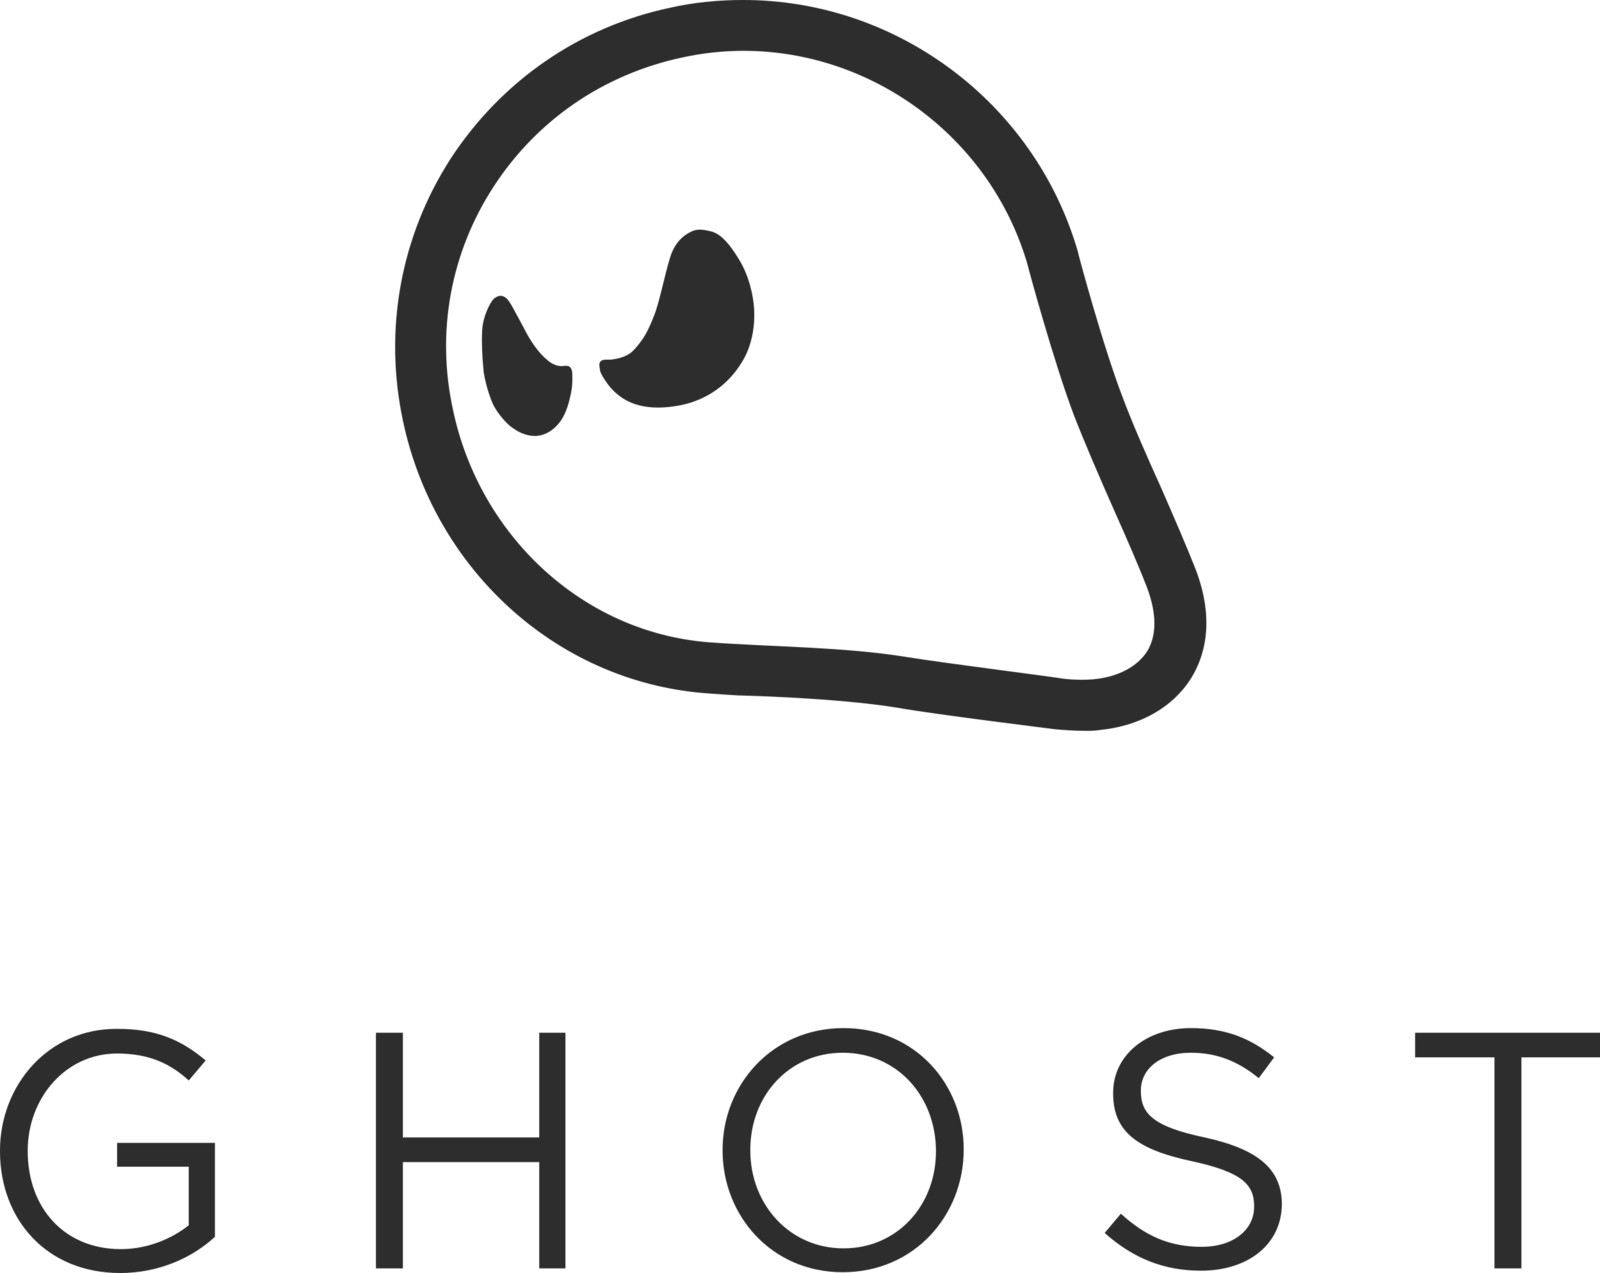 Ghost Logotype